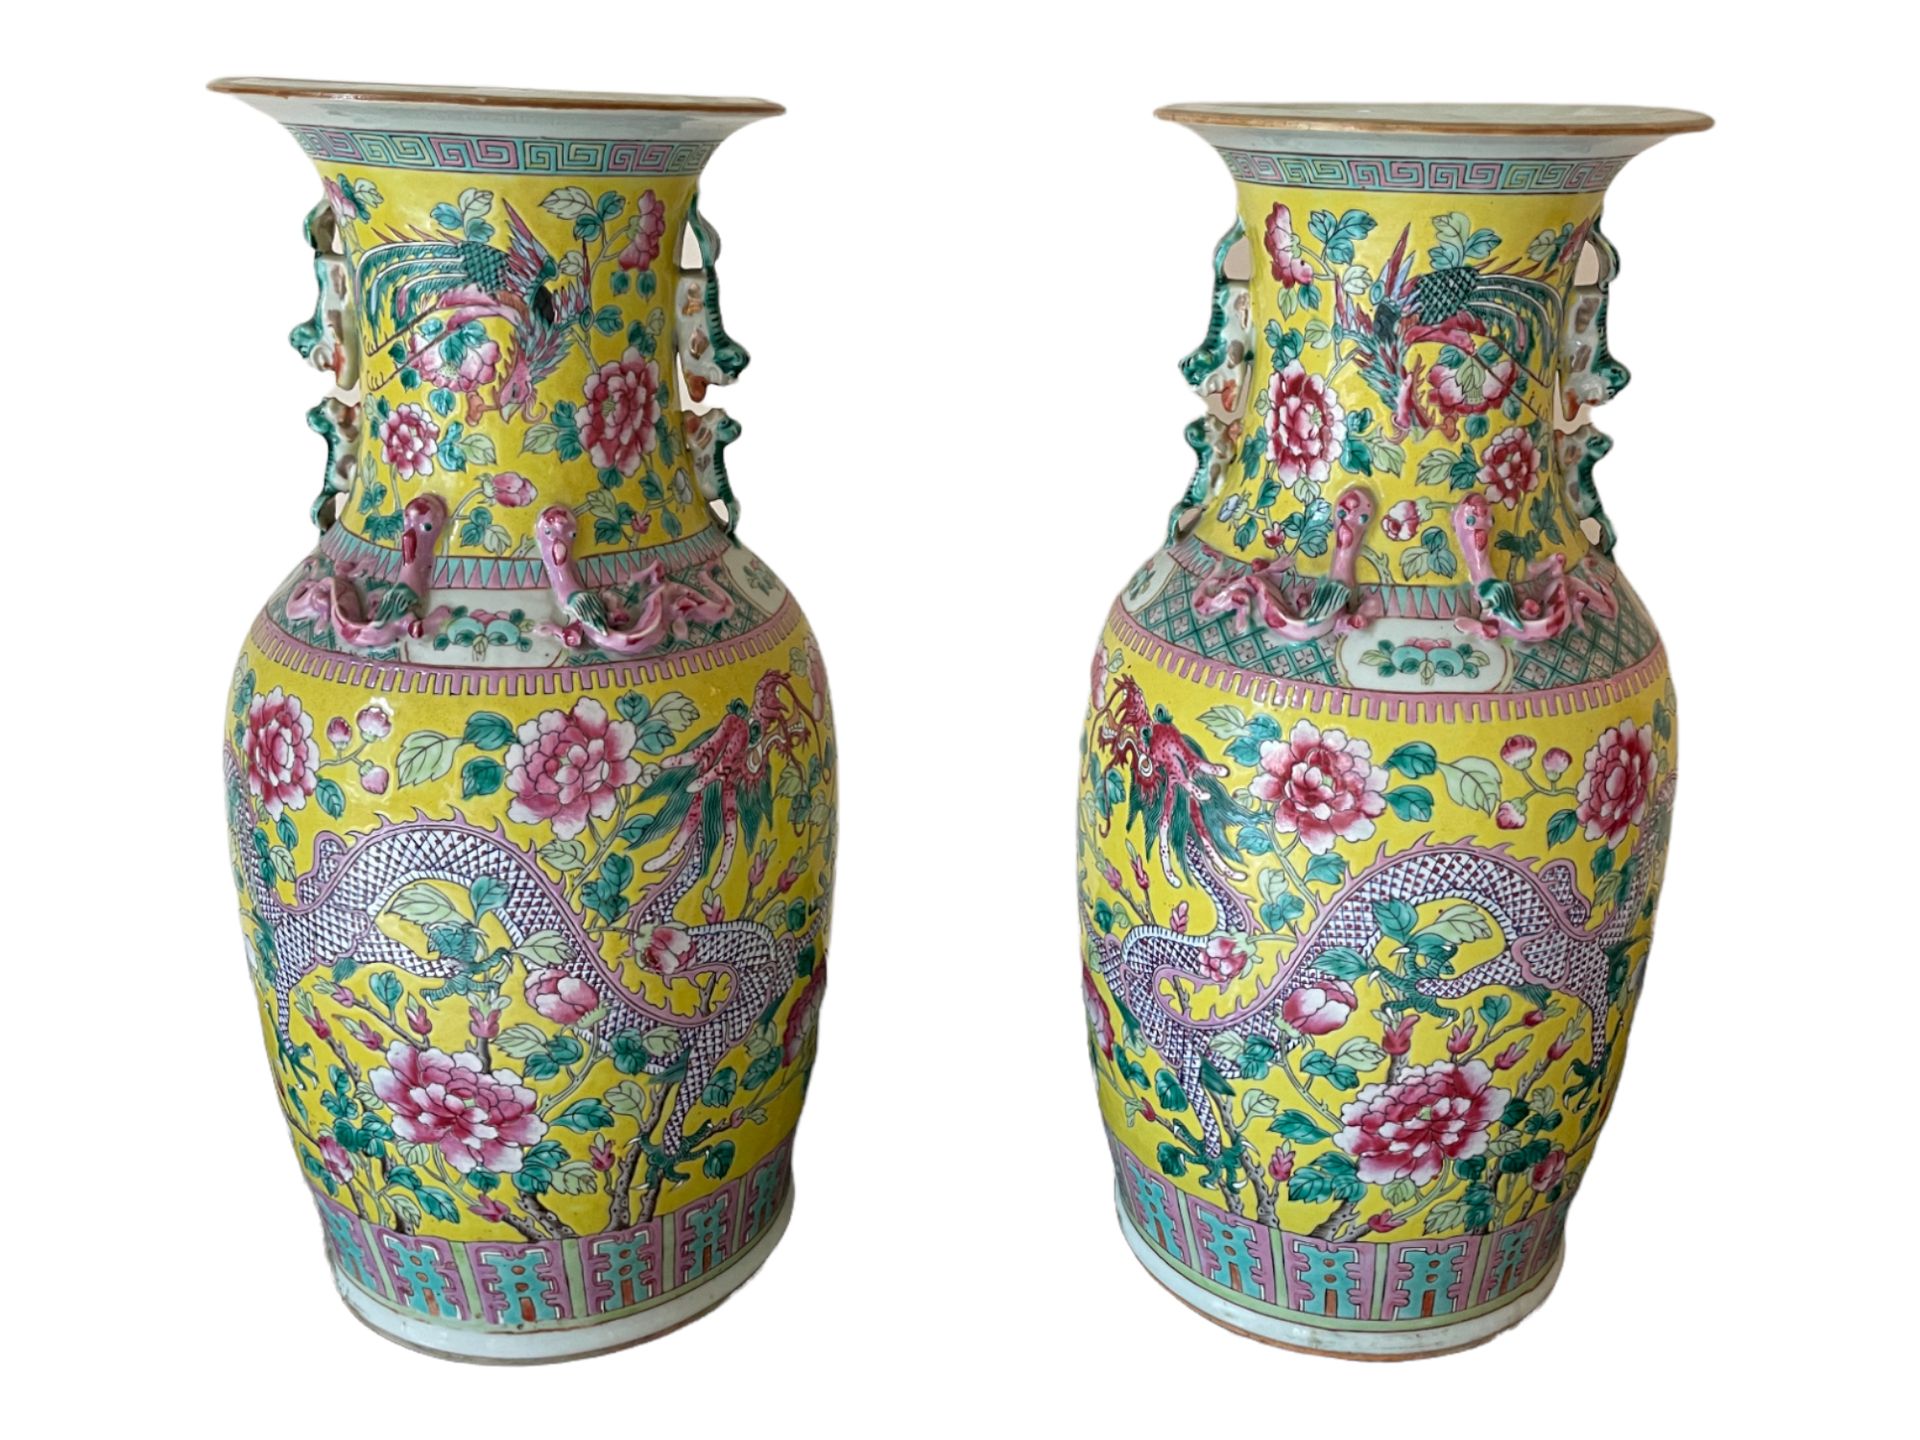 Null * 中国，19世纪

黄底多色珐琅彩花龙图案瓷瓶一对

H.44厘米